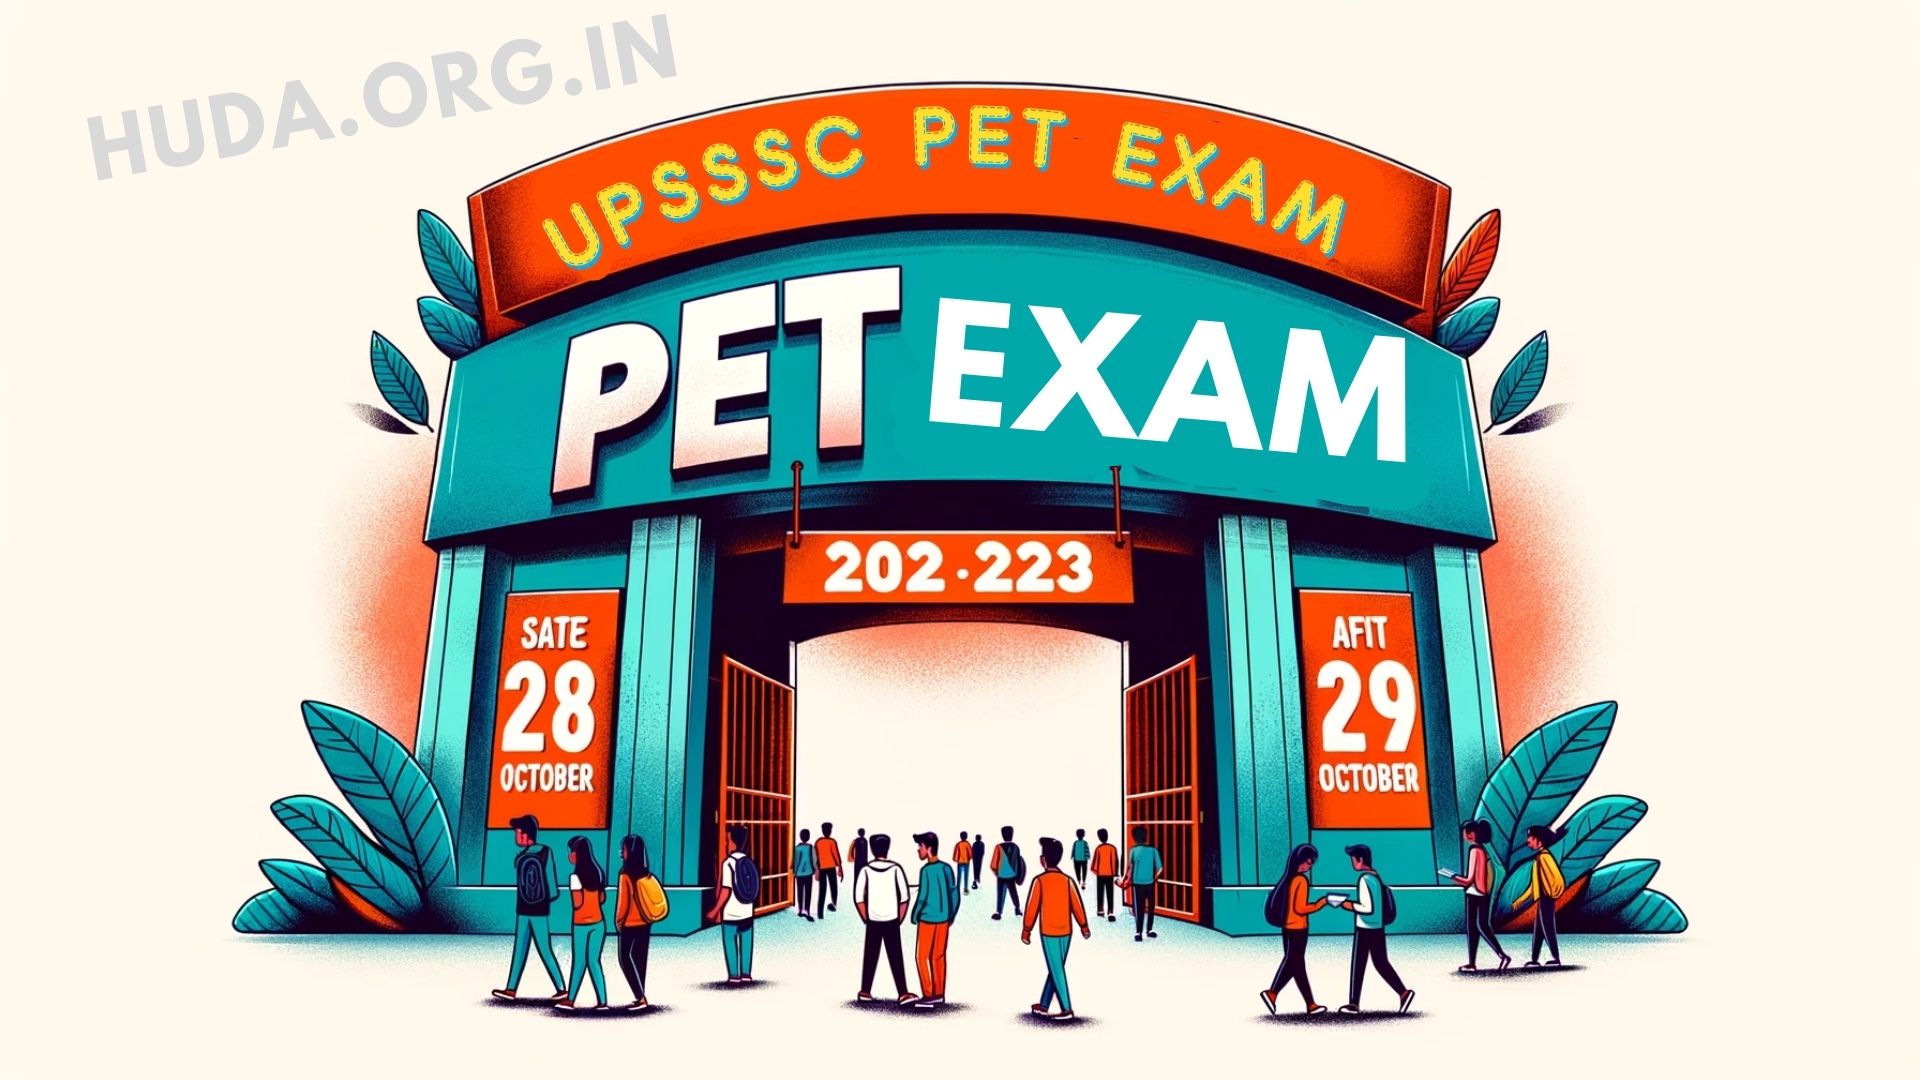 UPSSSC PET Exam 2023 Date, Eligibility Criteria and Syllabus